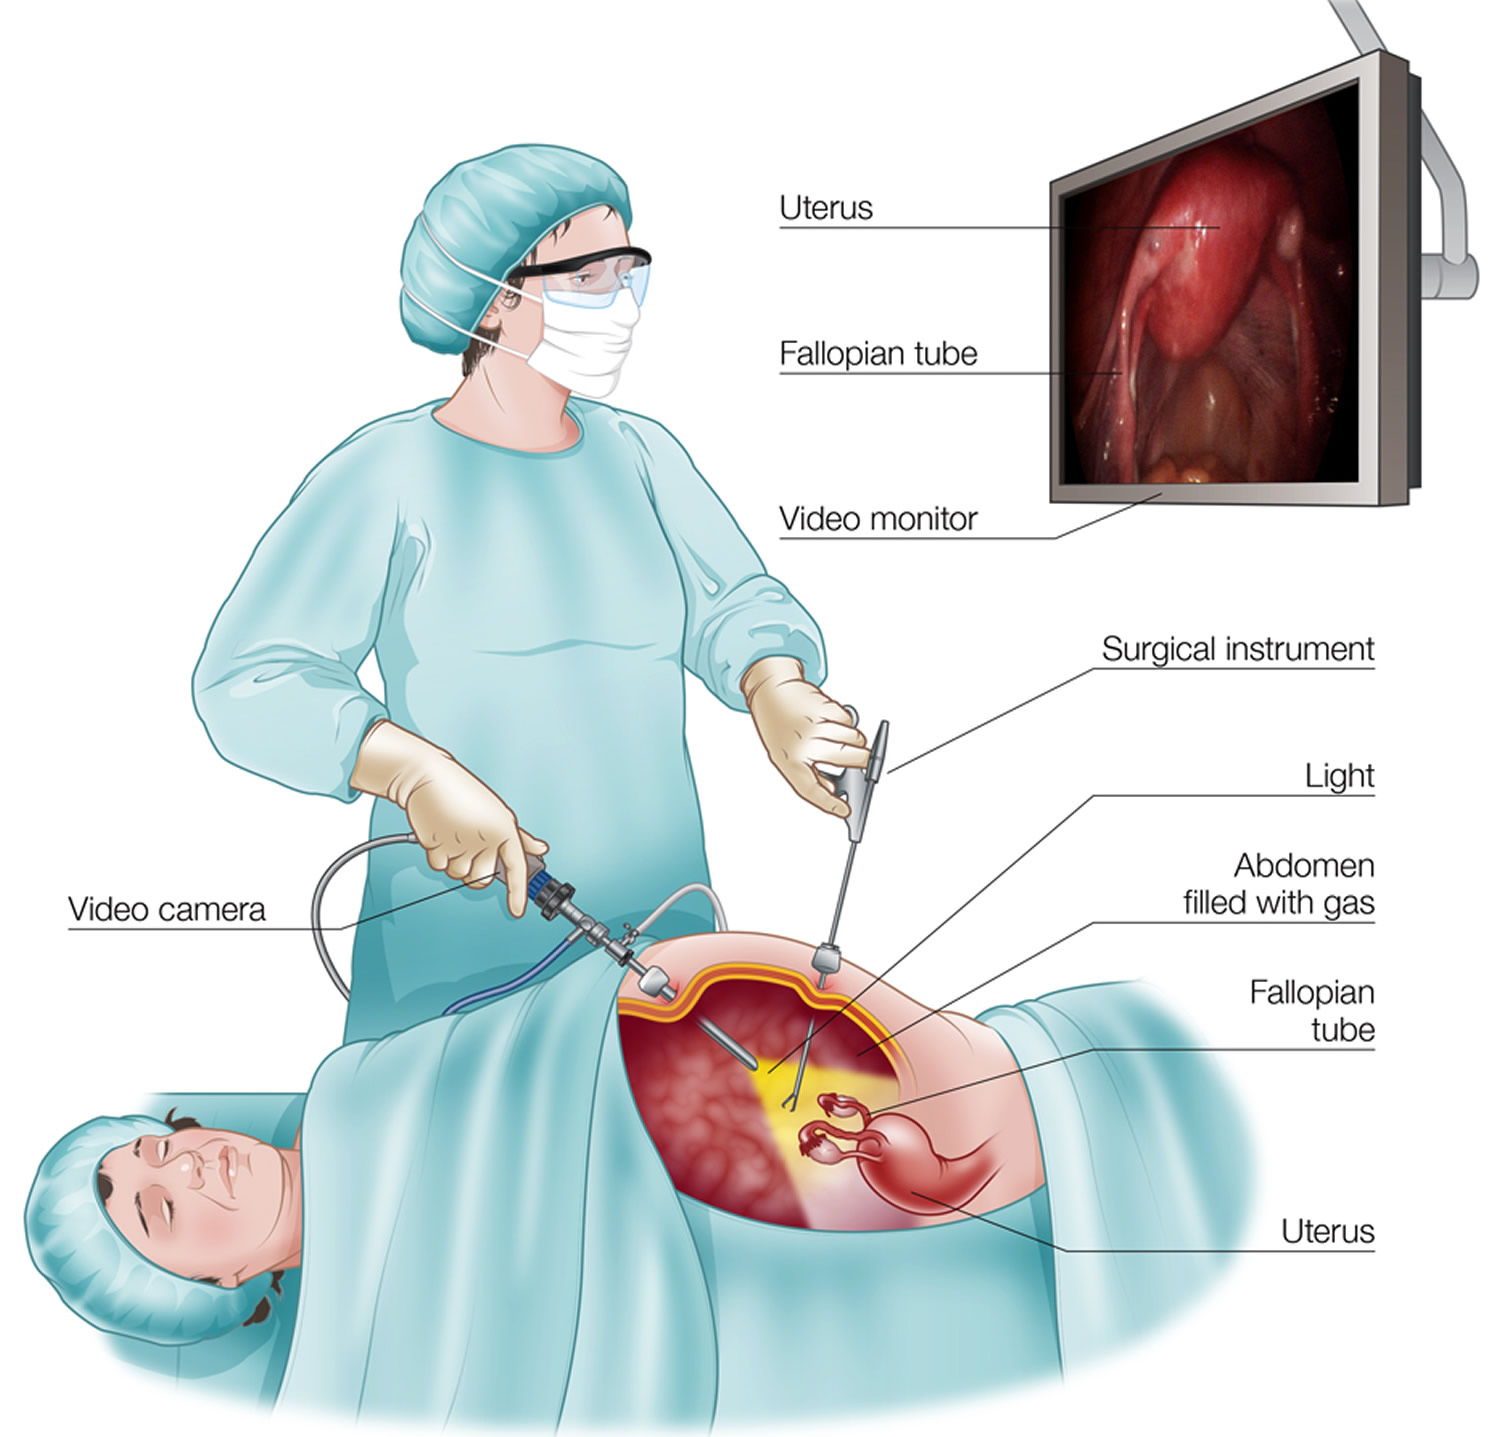 Surgery of Fallopian tube